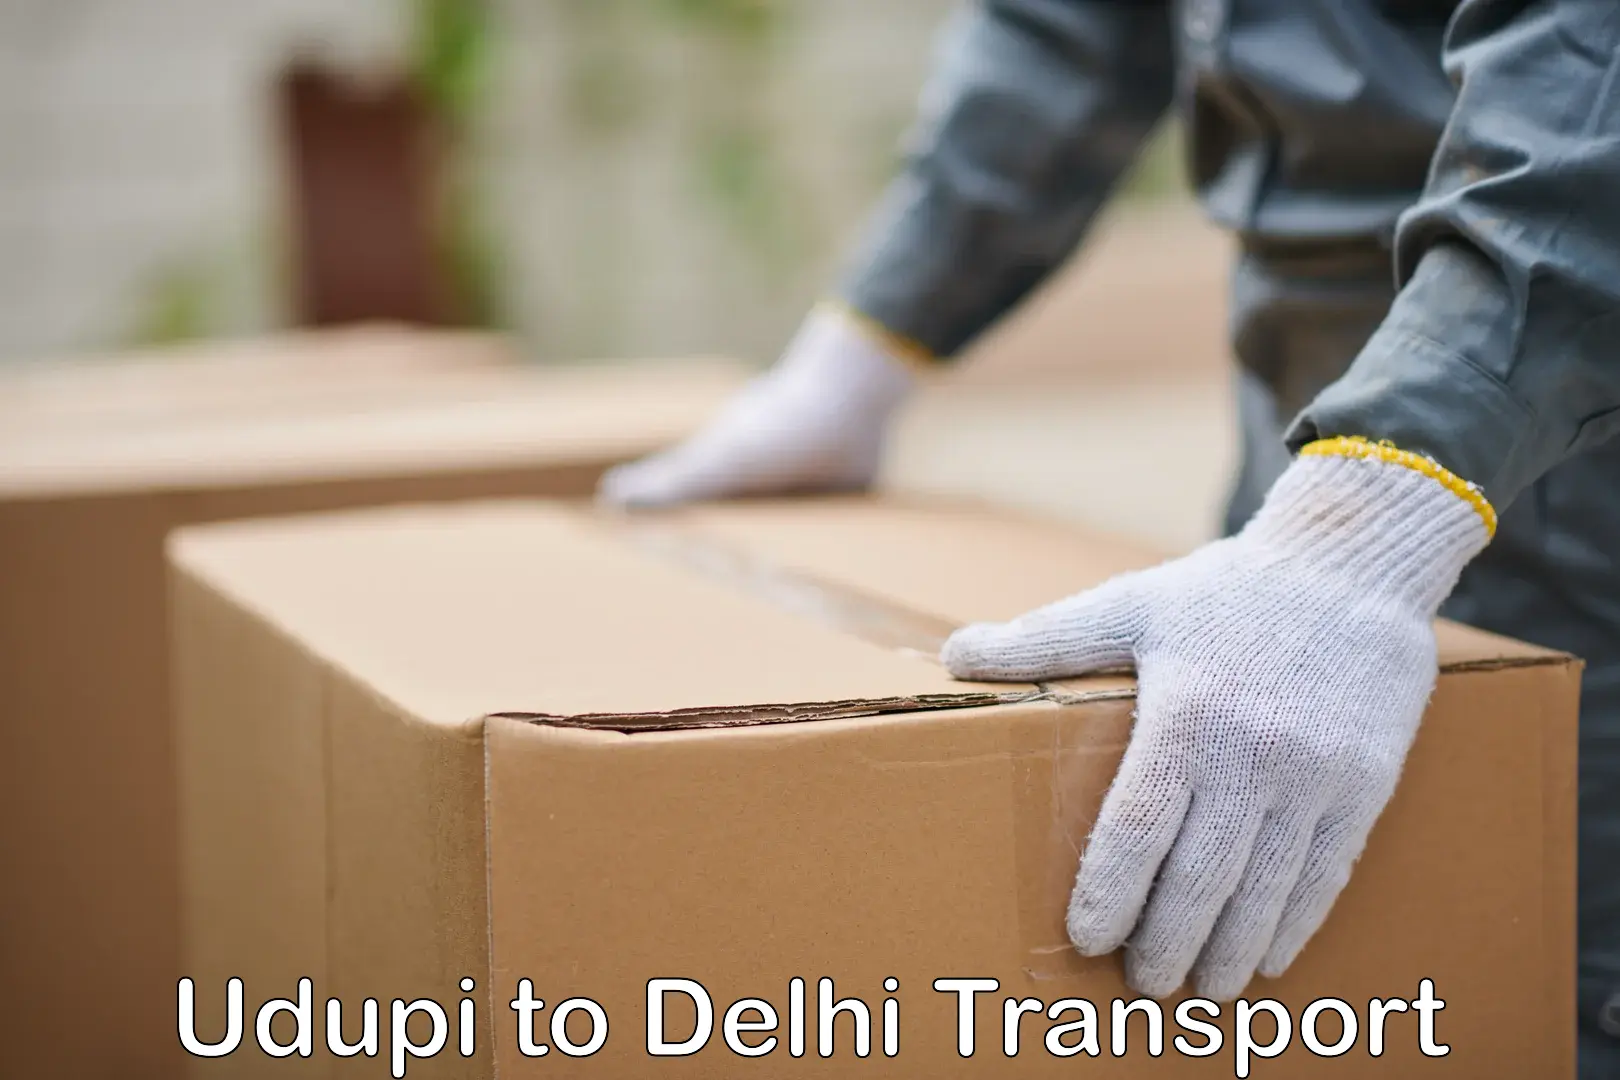 Bike transport service Udupi to Delhi